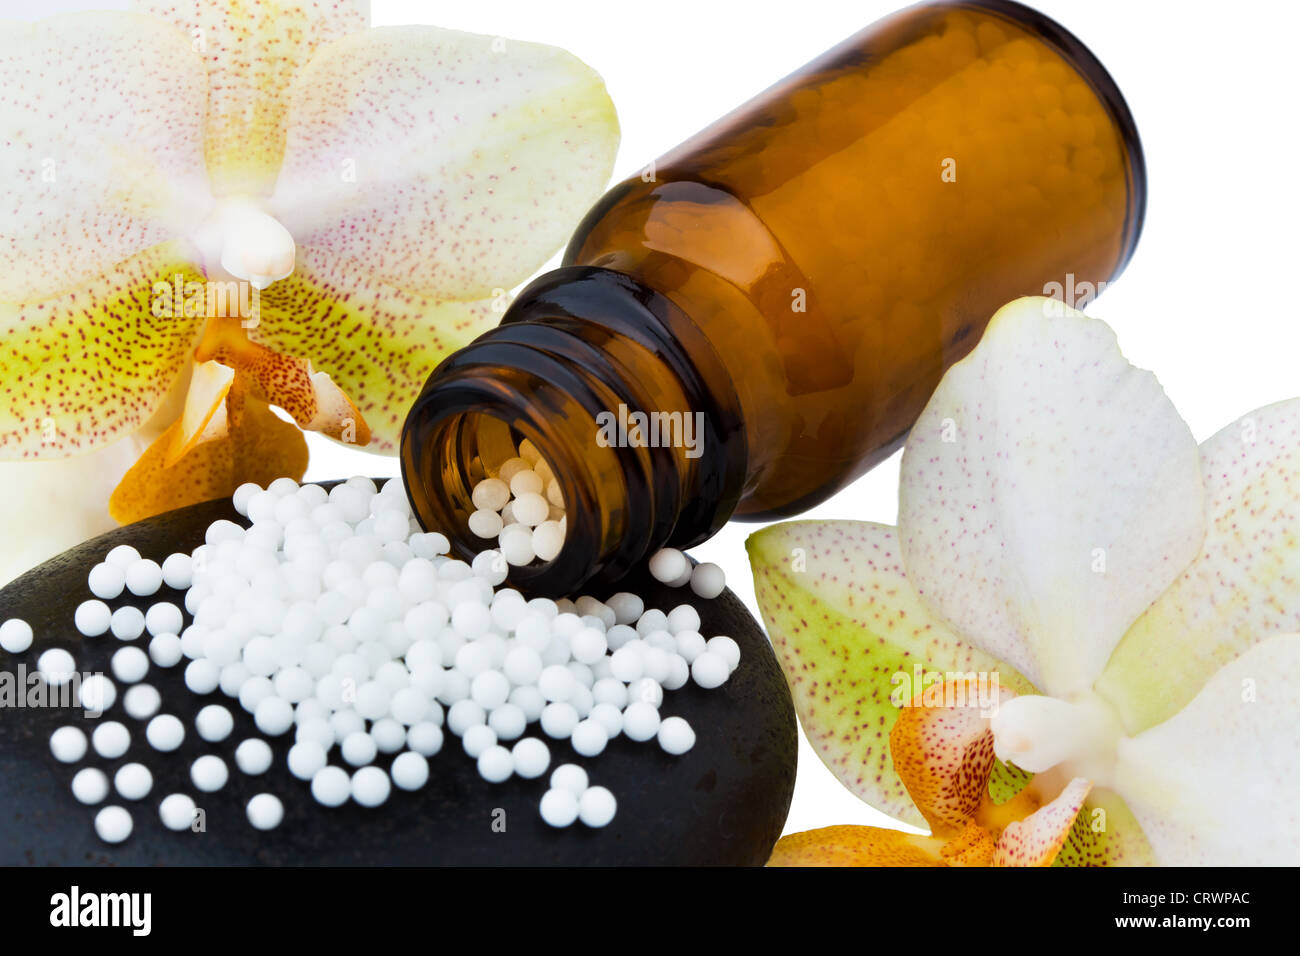 Homeopathy. Globules as alternative medicine Stock Photo